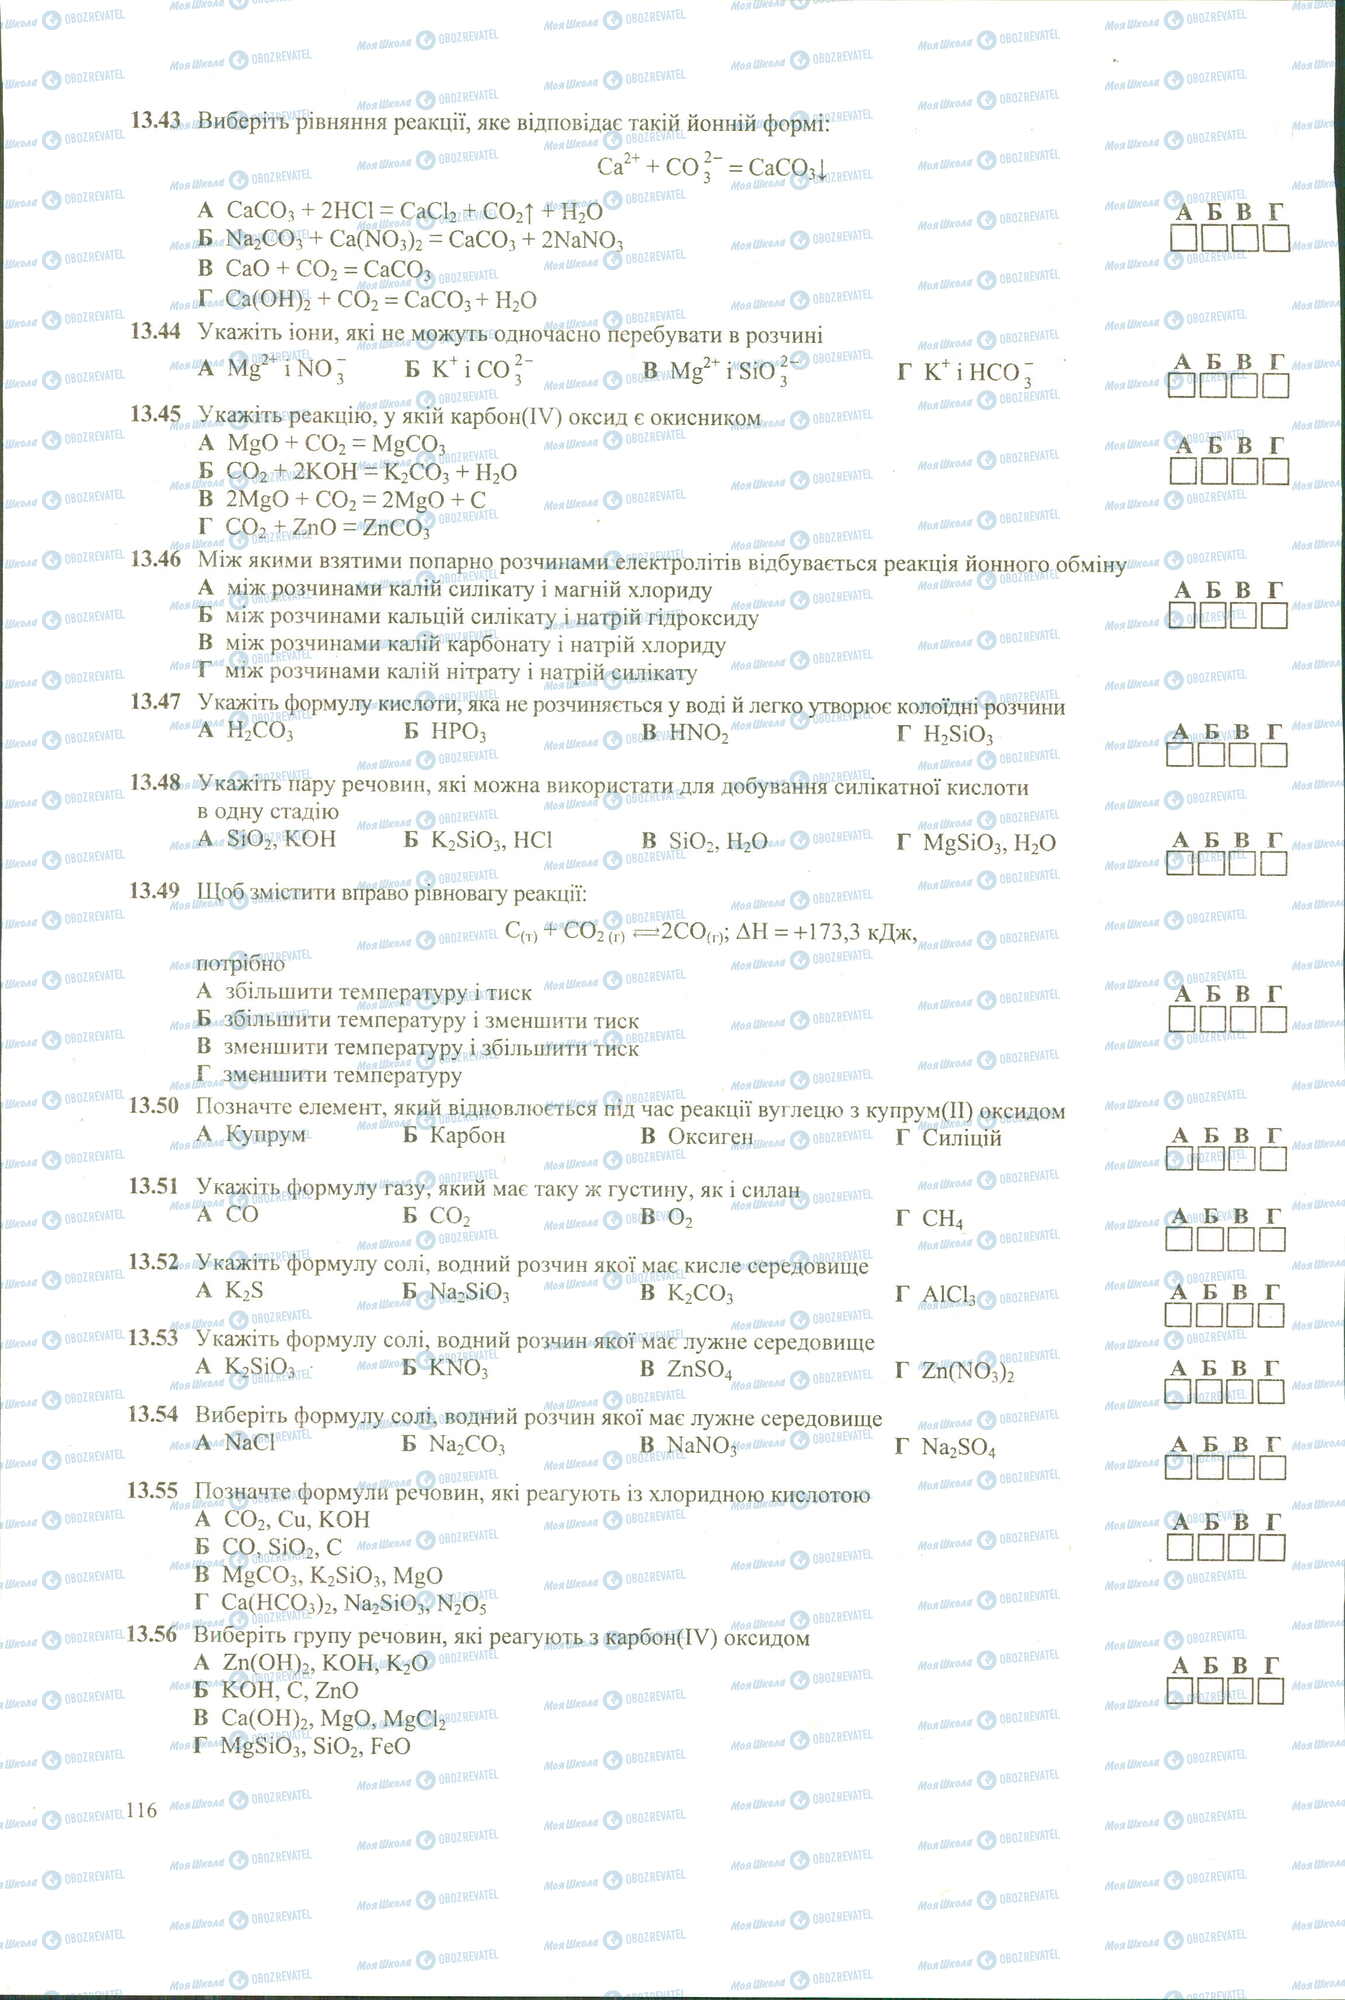 ЗНО Химия 11 класс страница 43-56